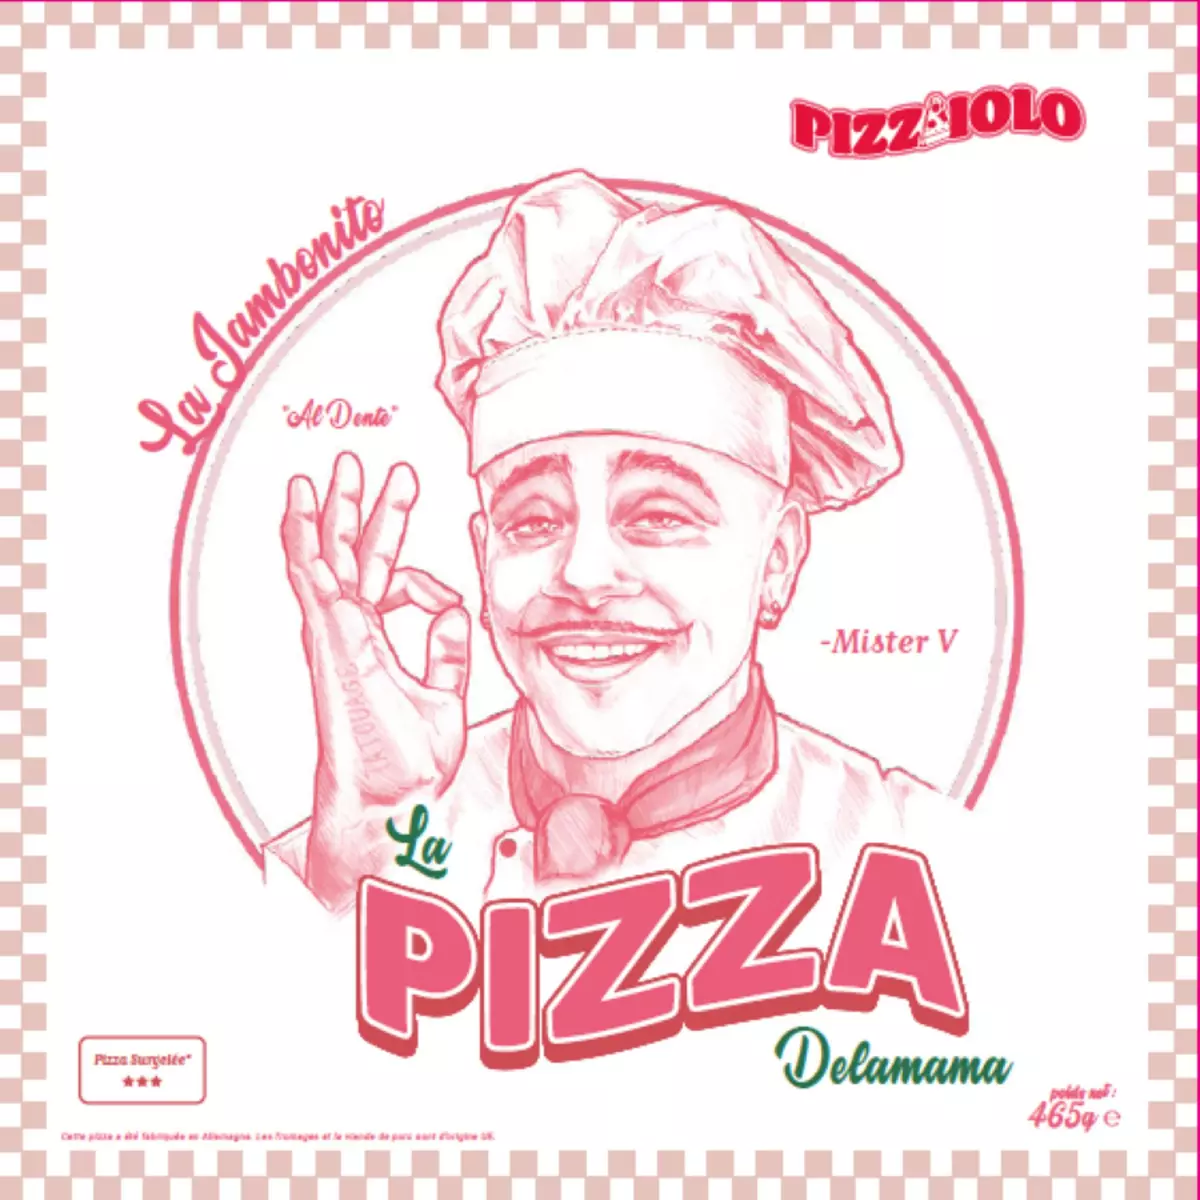 PIZZAIOLO Delamama Pizza au jambon Mister V 465g